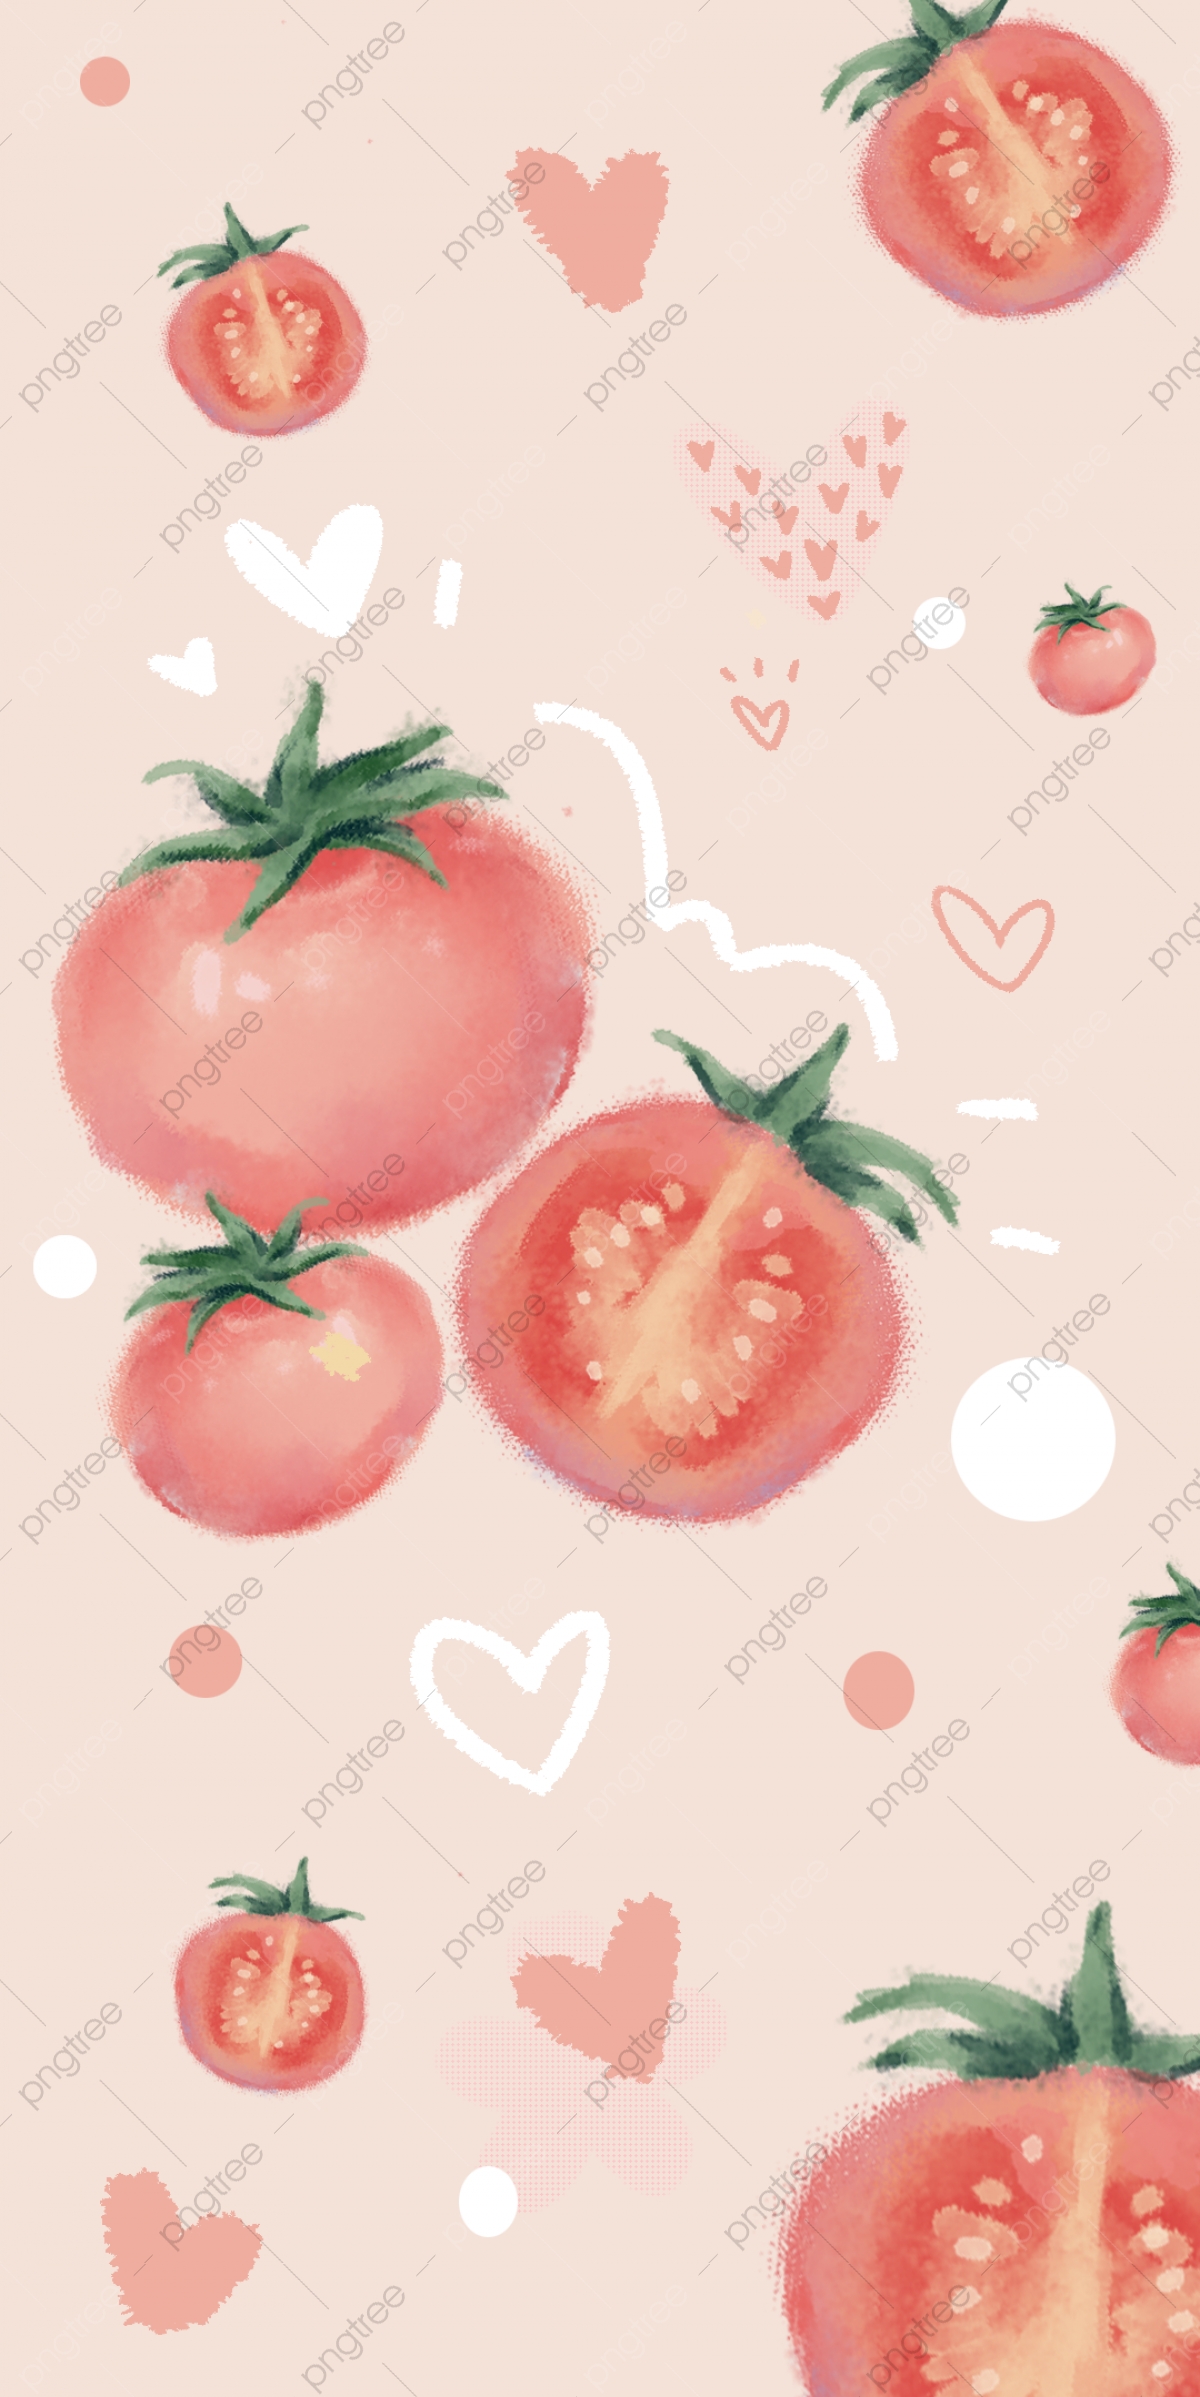 Tomato Wallpapers